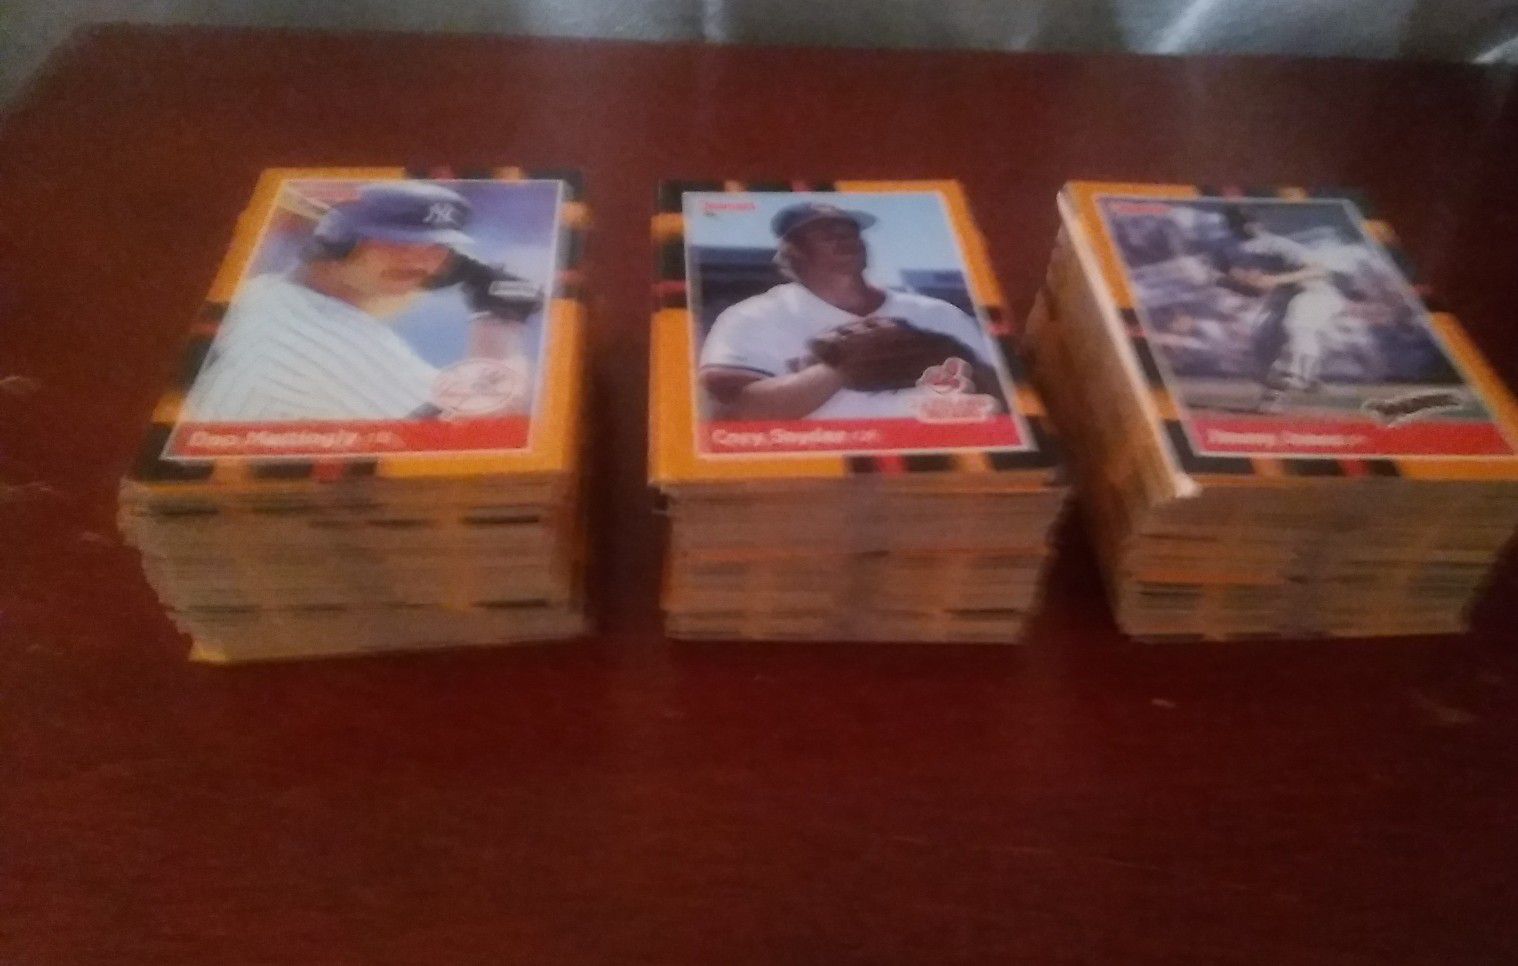 1988 Donruss Baseball Trading Cards - Over 280 Cards